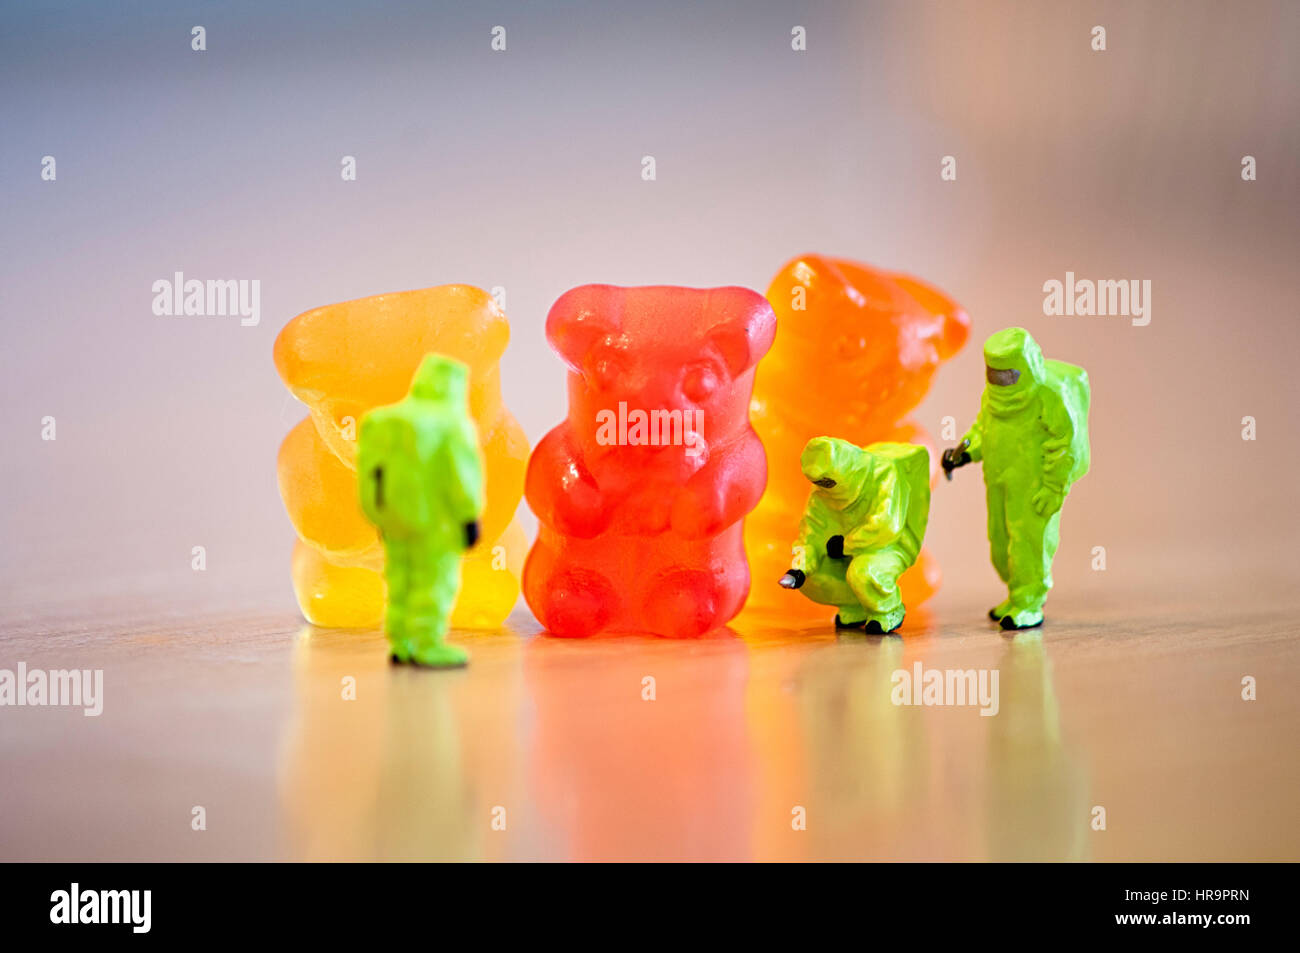 Group of Gummi bears. Food concept Stock Photo